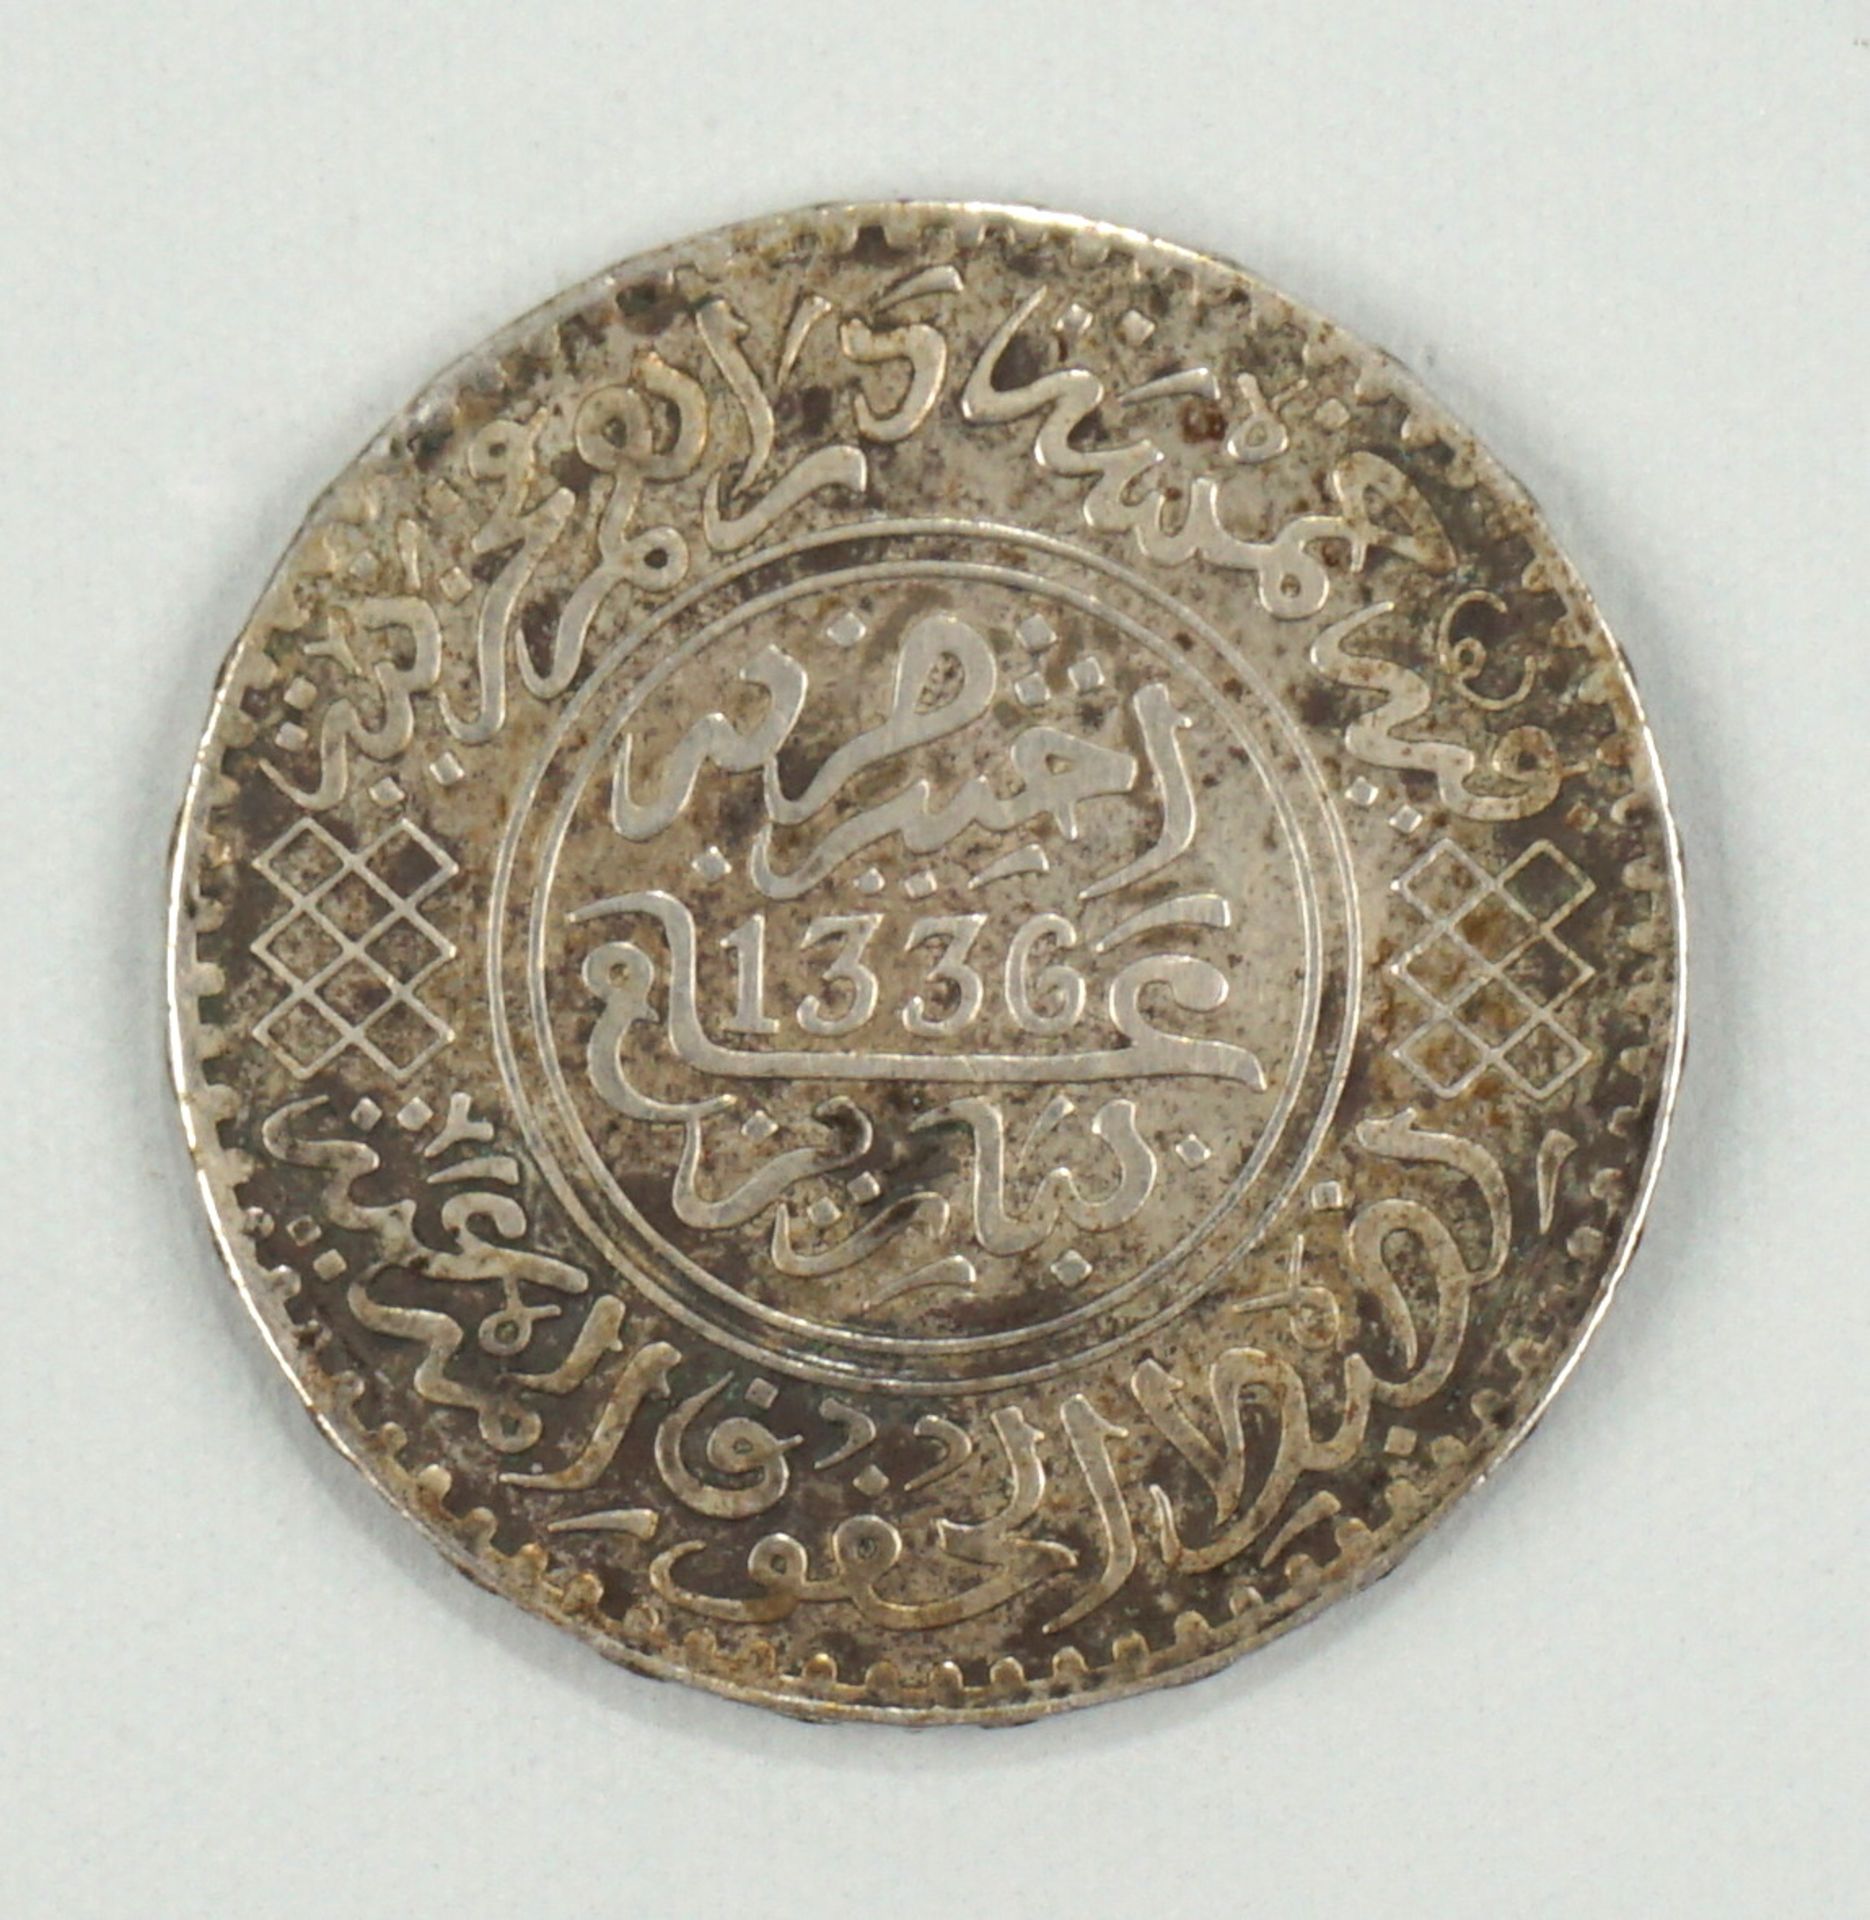 Marokko 5 Dirhams (1/2 Rial) 1917, Silber - Image 2 of 2